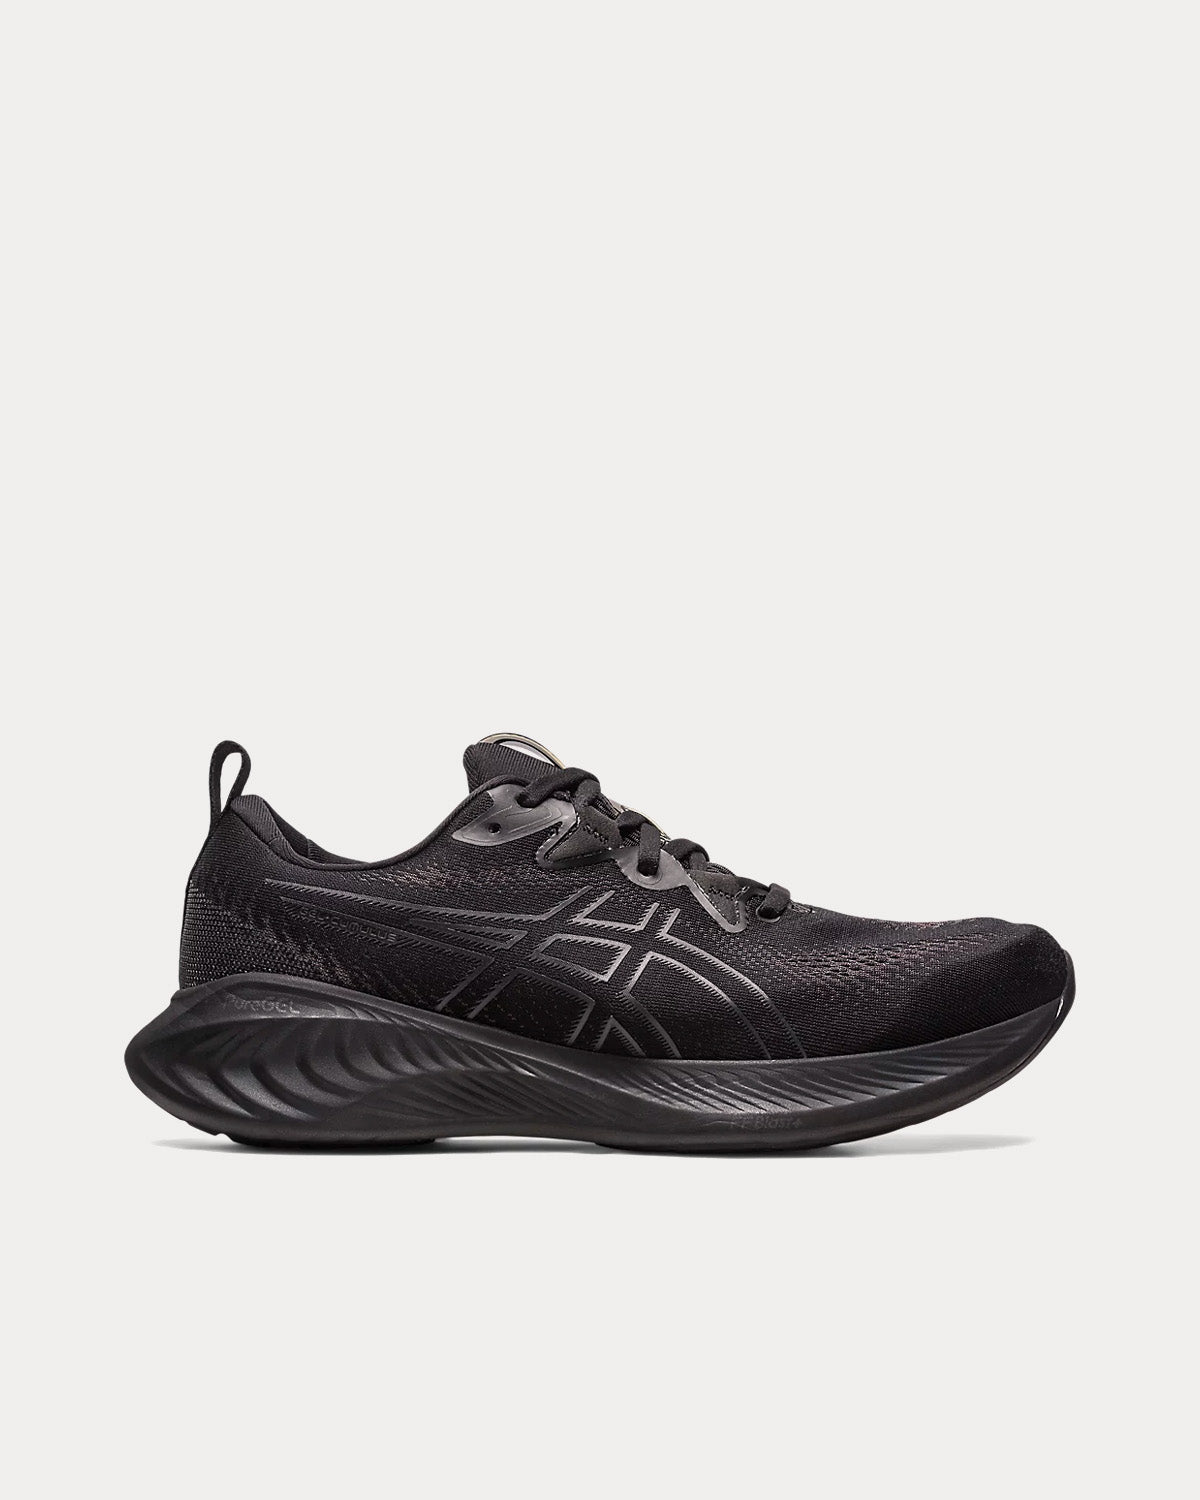 Men's GEL-NIMBUS 25, Black/Lime Zest, Running Shoes